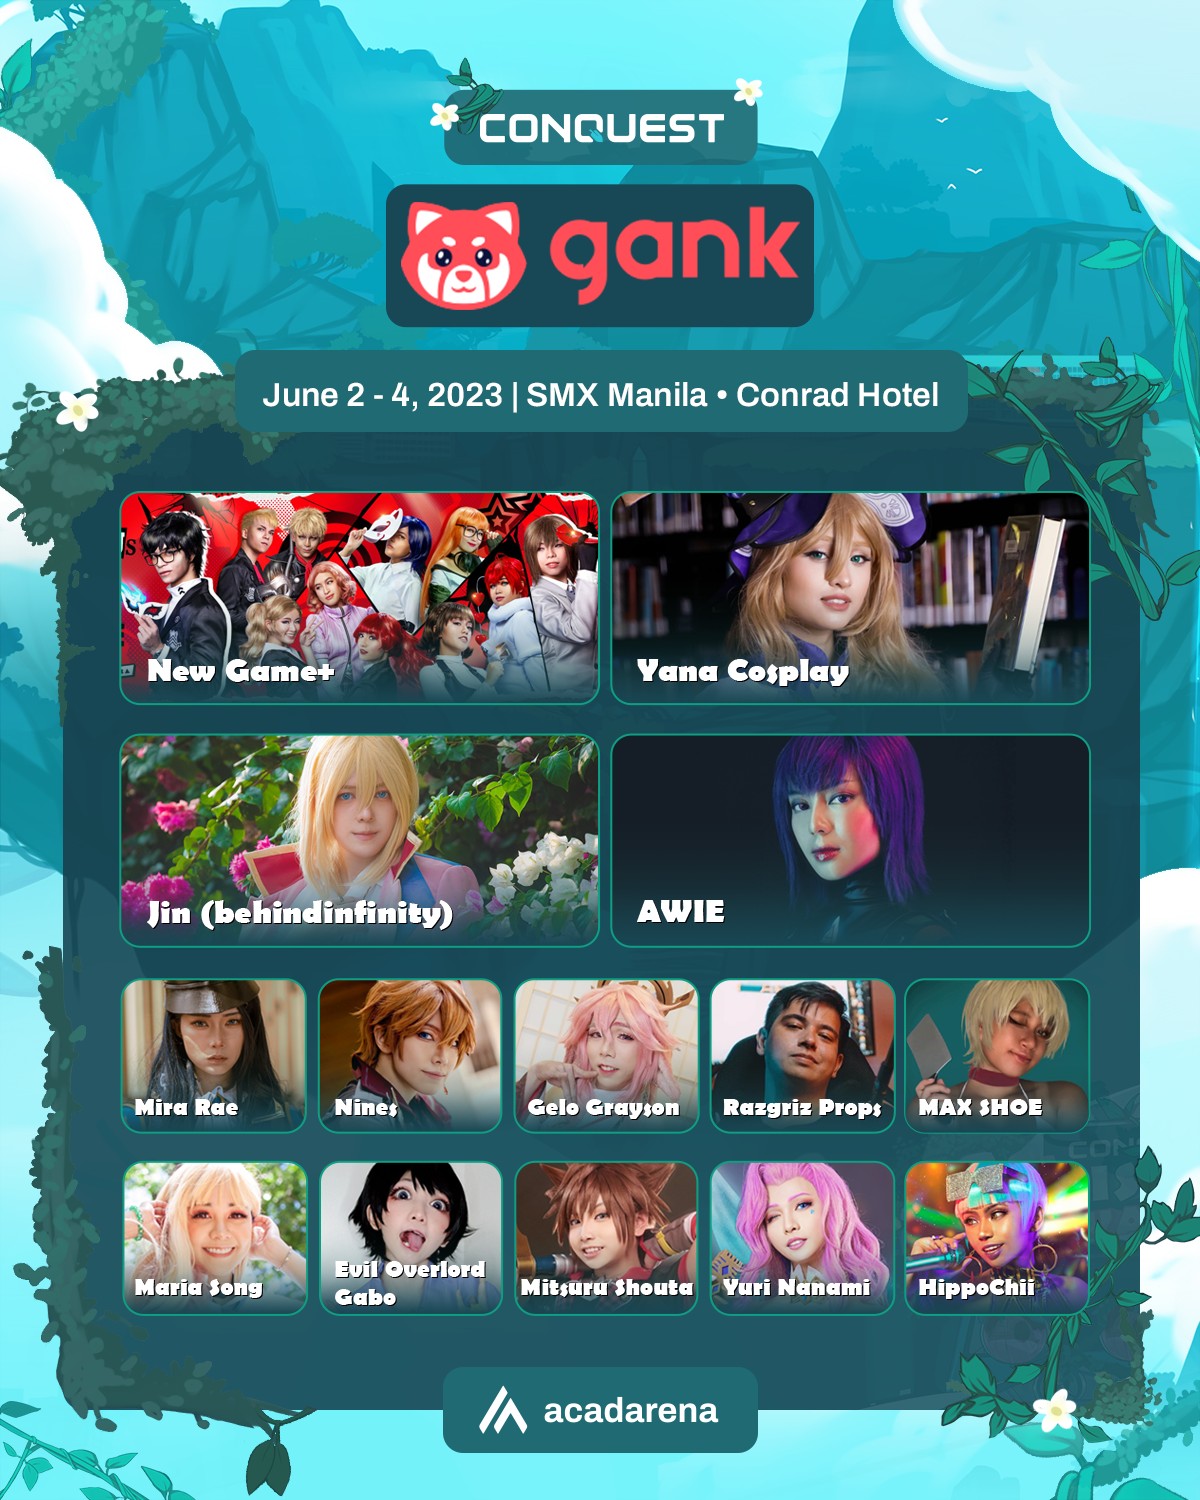 Conquest Festival 2023 Guide Gank 